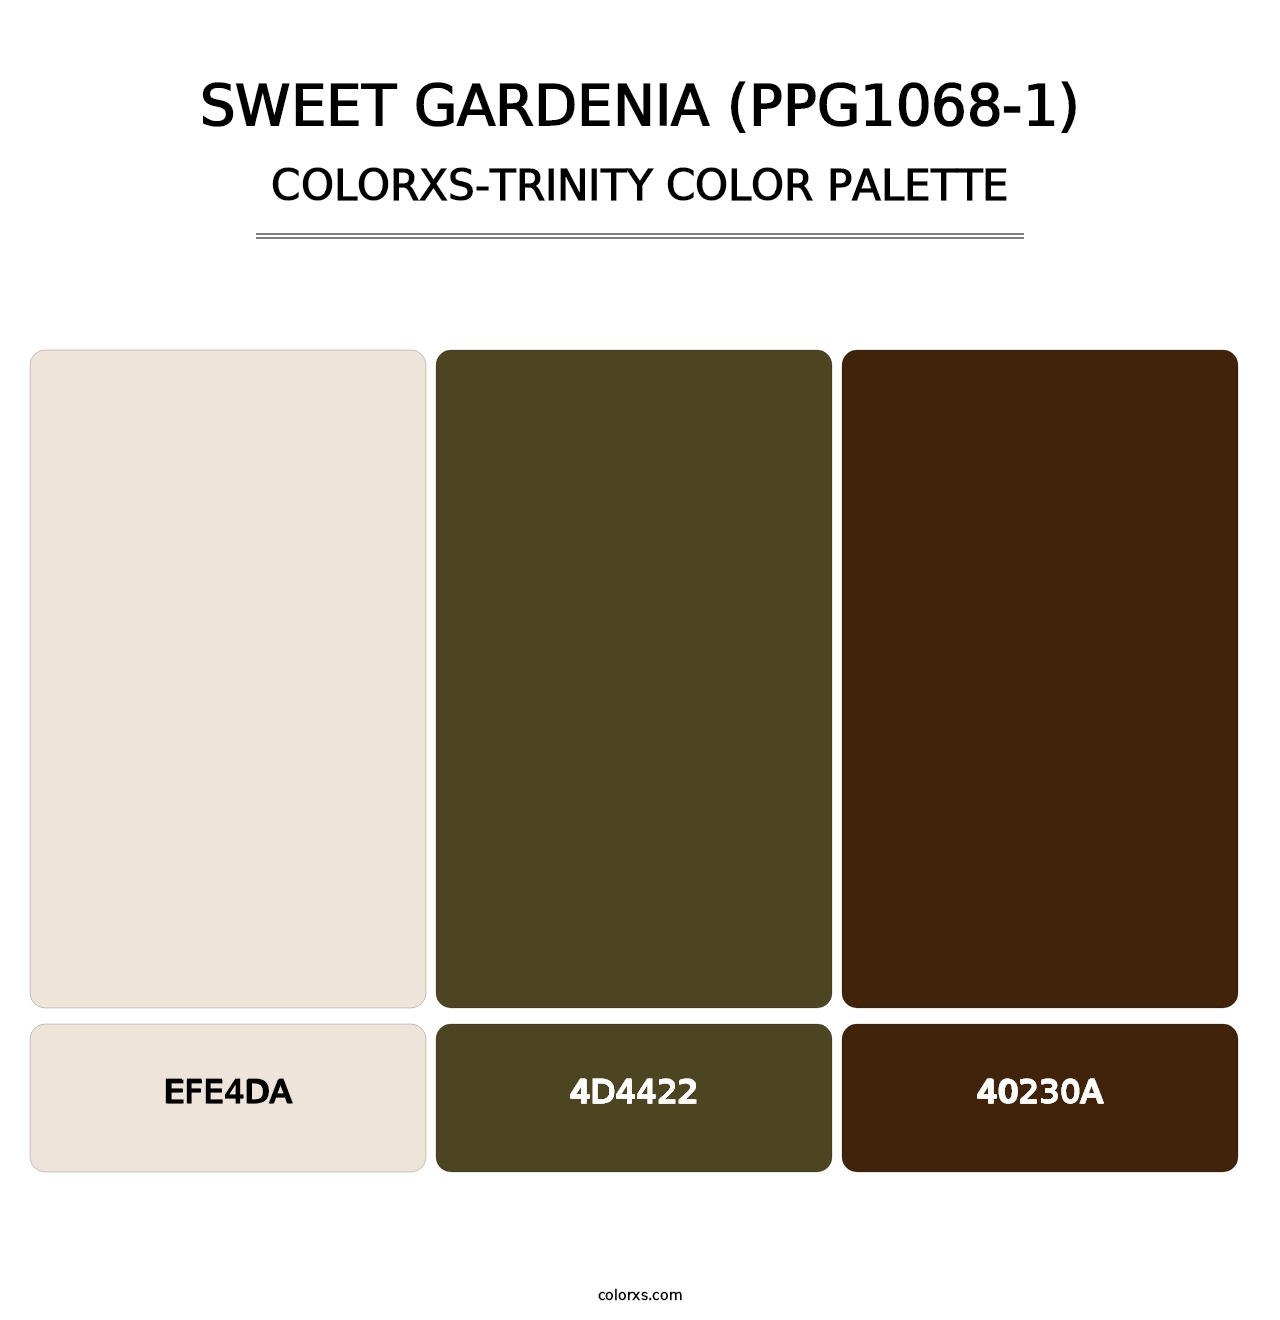 Sweet Gardenia (PPG1068-1) - Colorxs Trinity Palette